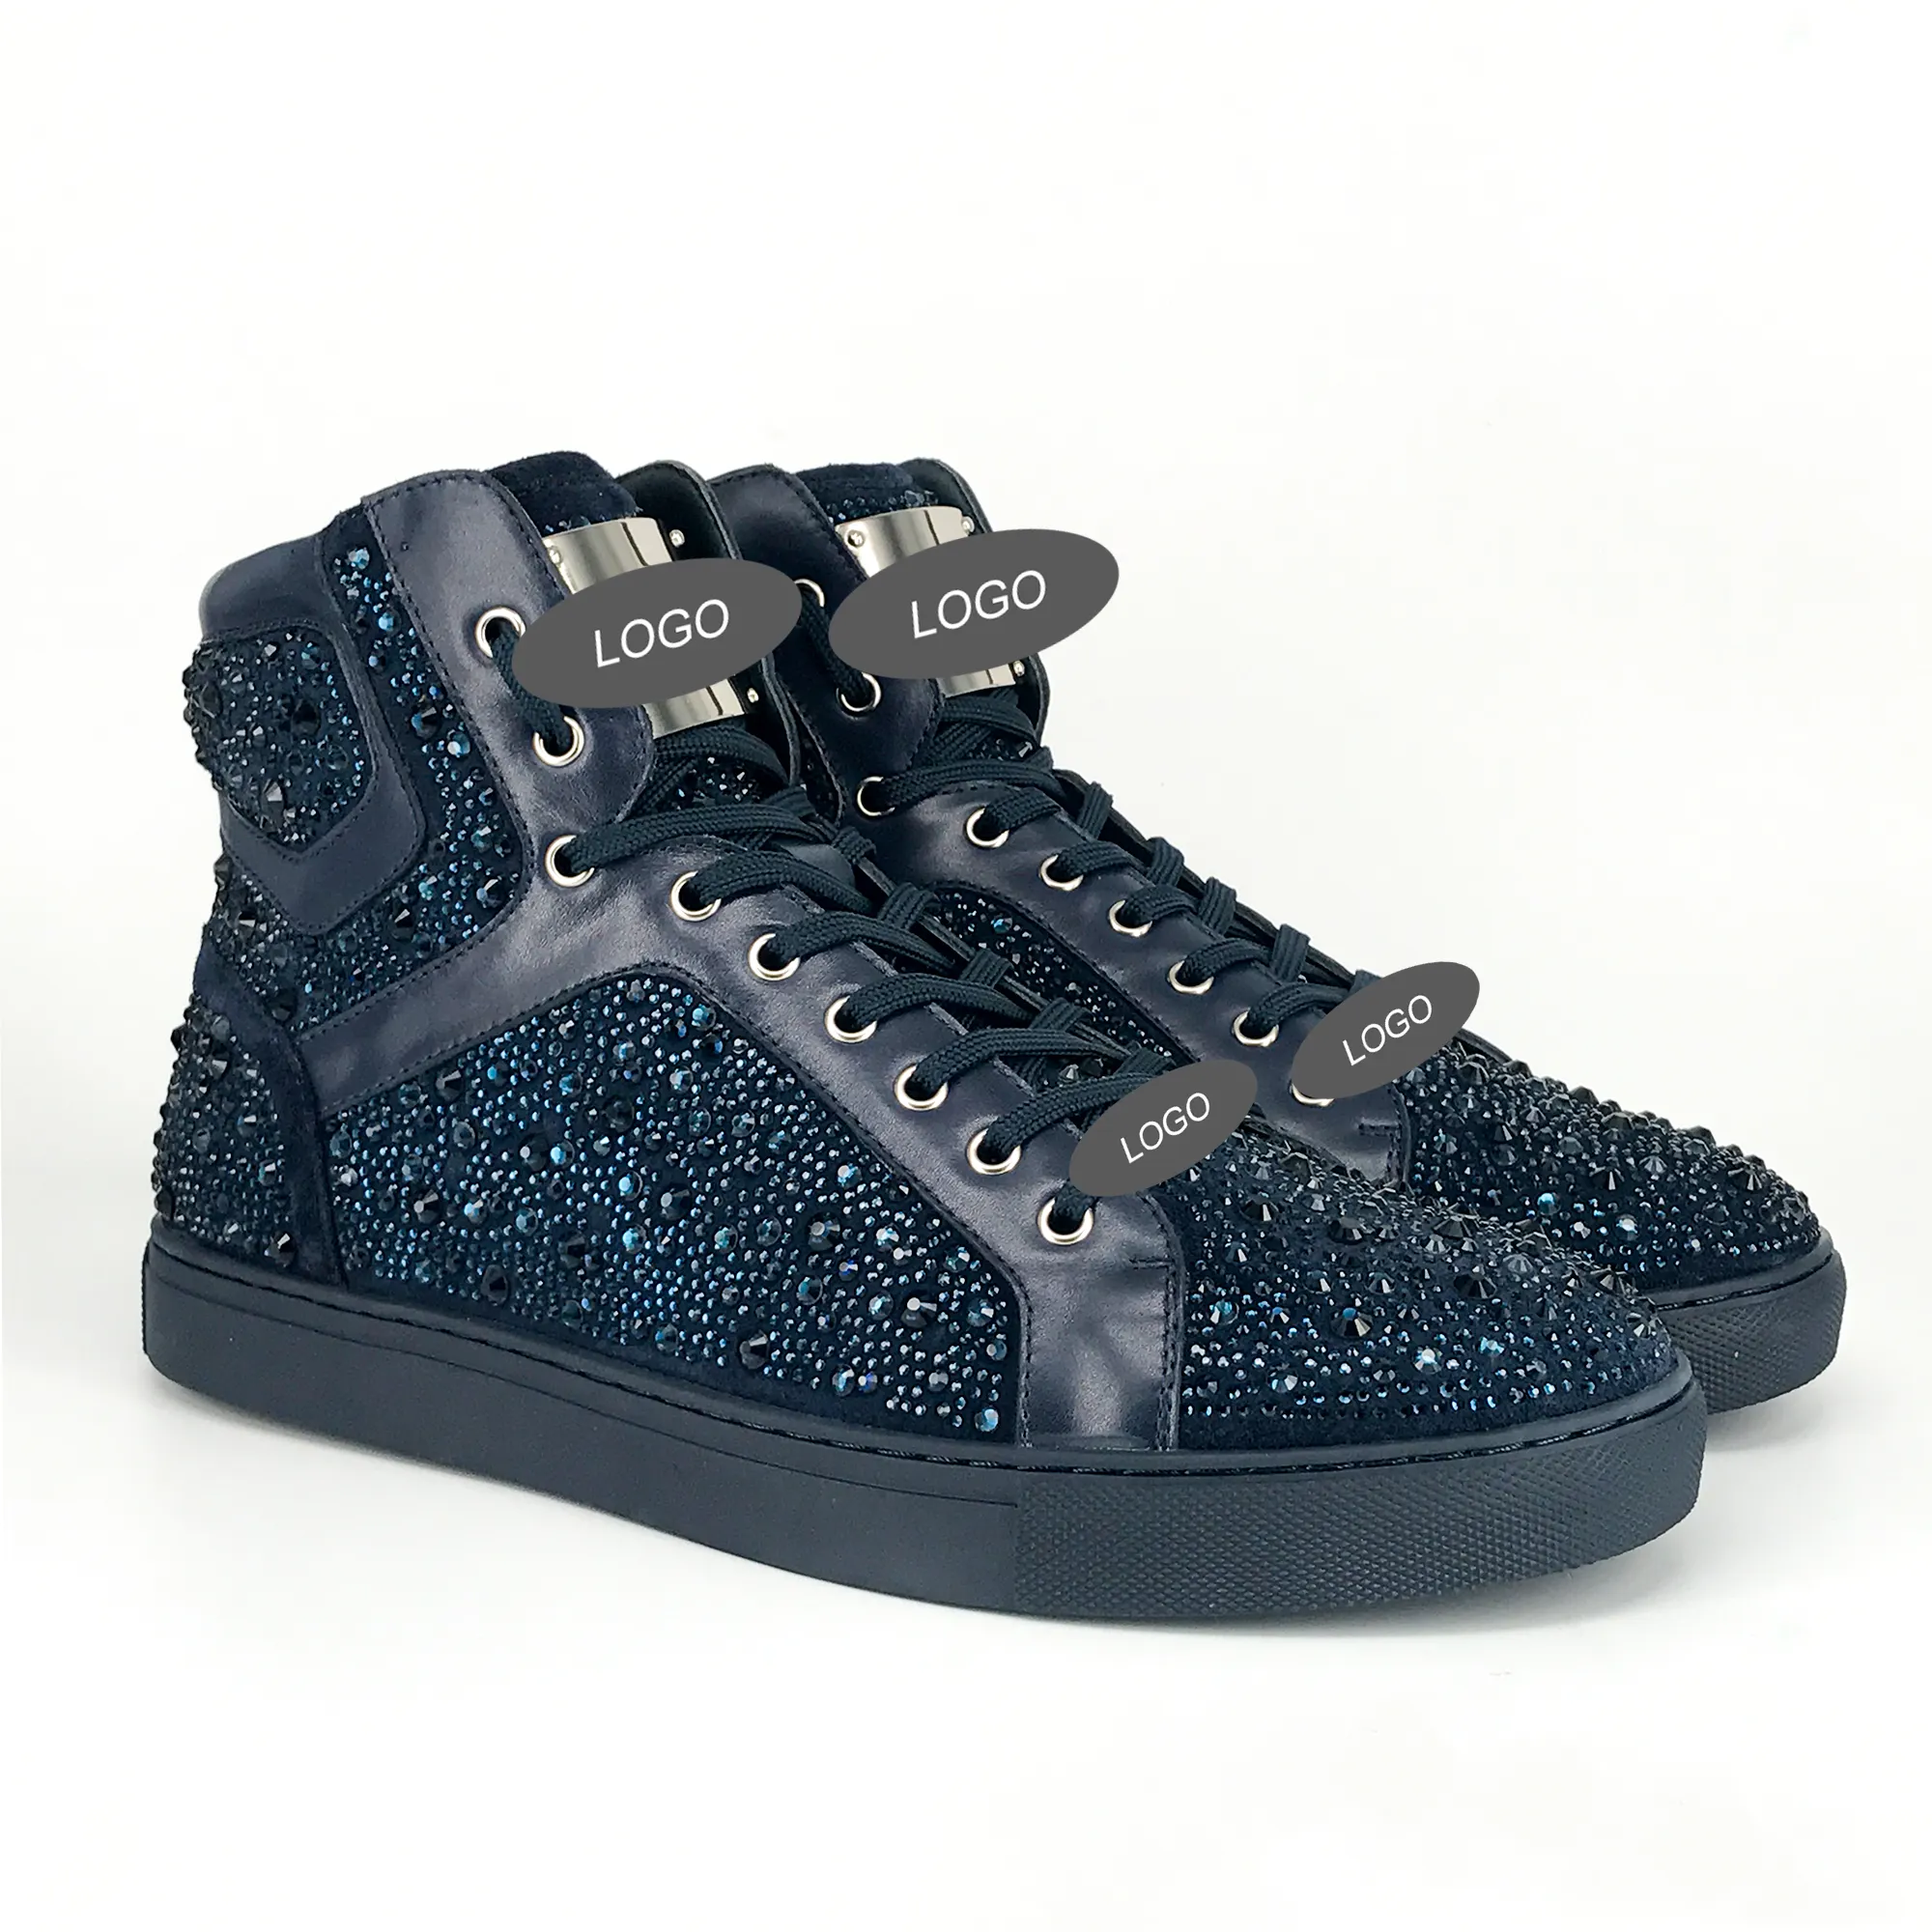 MIE2 Man-made Diamonds sharp design Navy Blue rhinestone leather sneaker high top sneaker